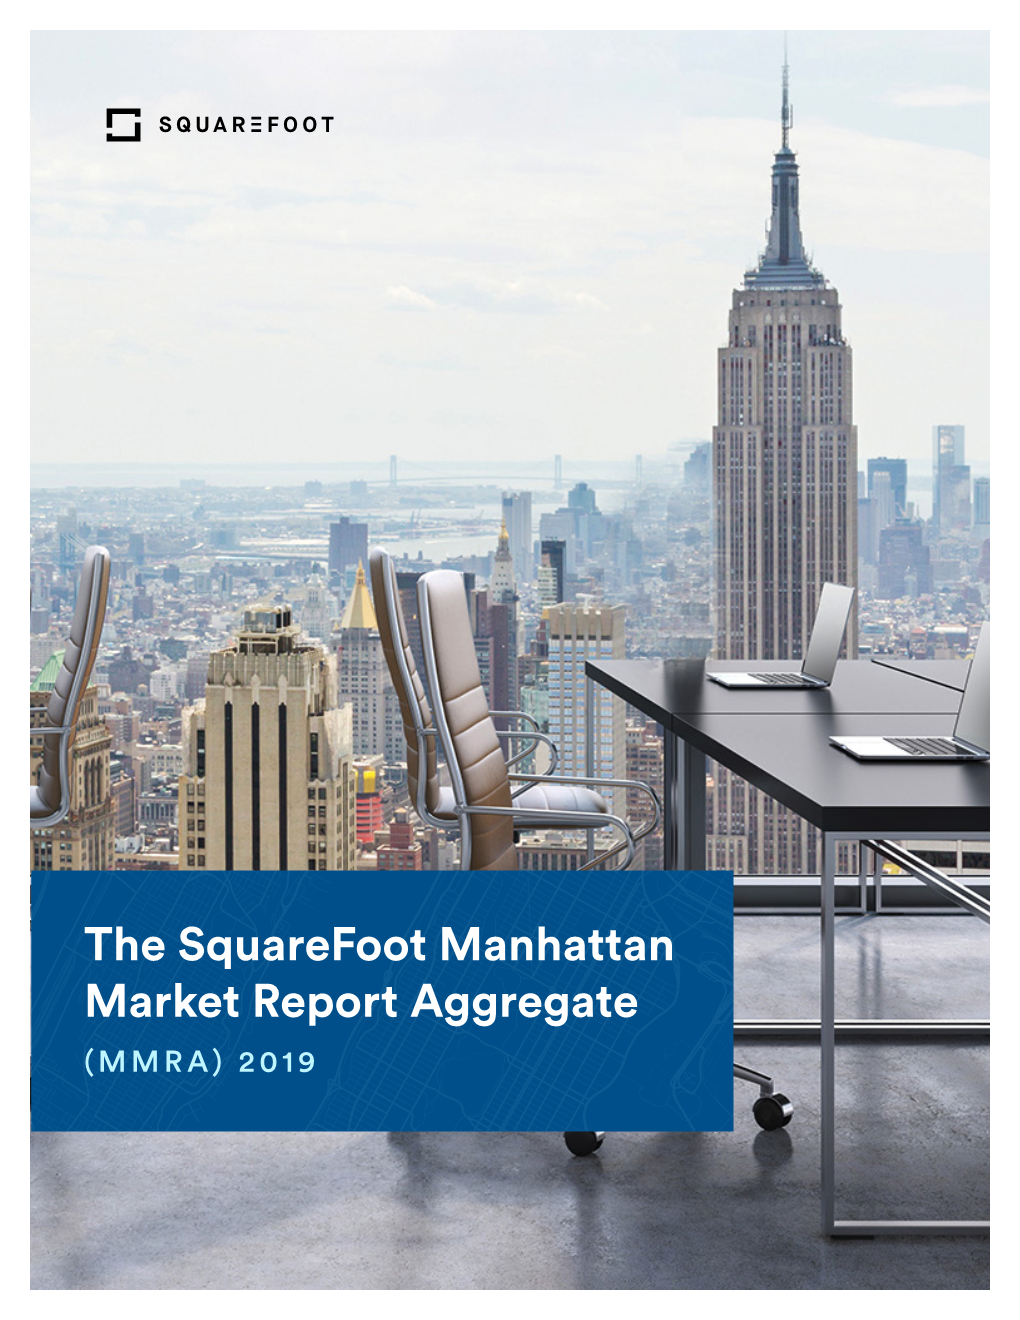 The Squarefoot Manhattan Market Report Aggregate (MMRA) 2019 the Squarefoot Manhattan Market Report Aggregate (MMRA) 2019